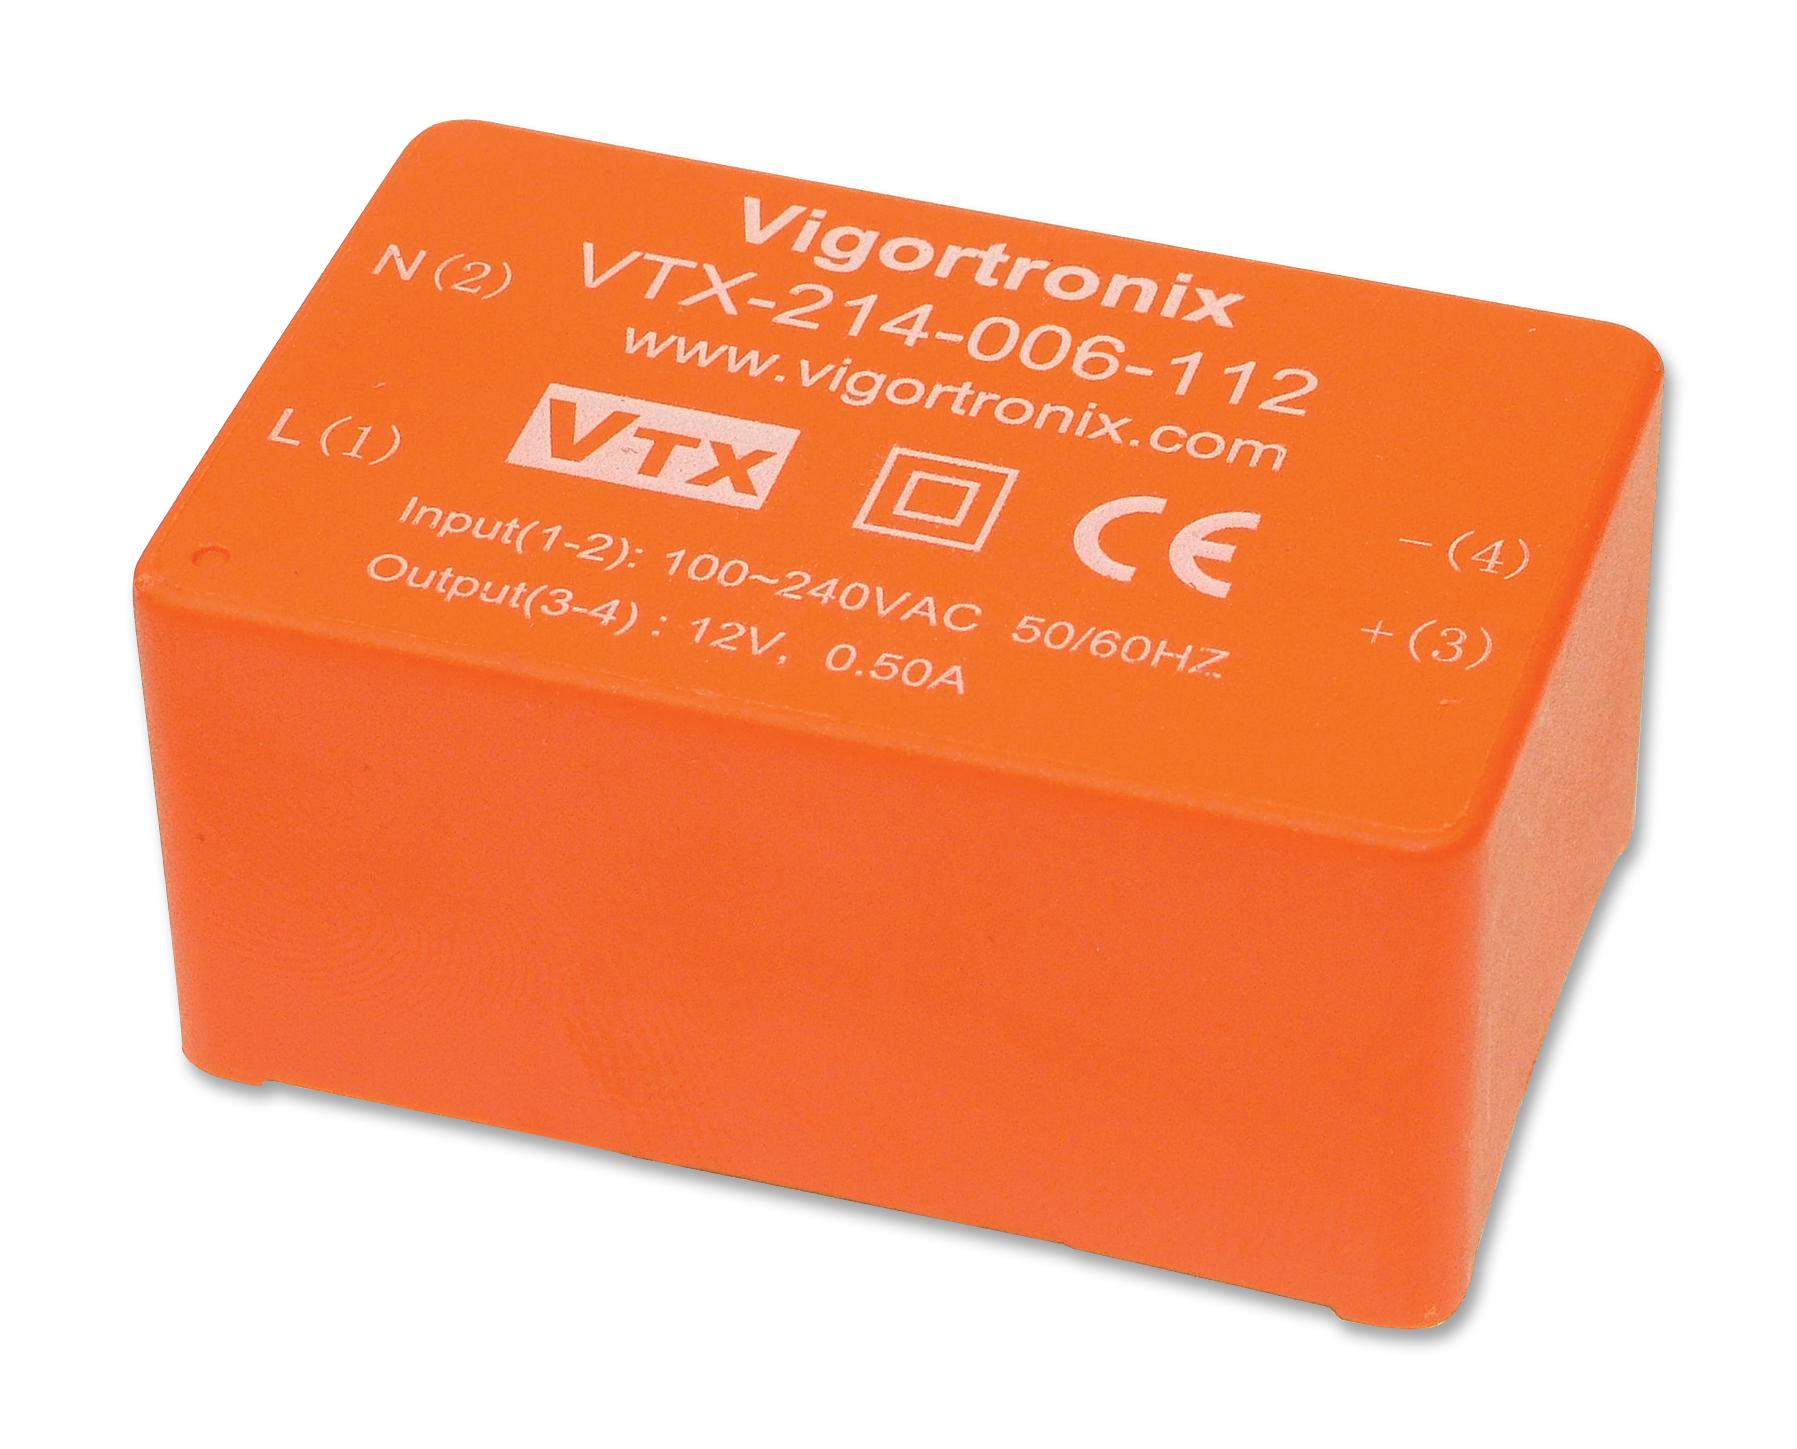 VTX-214-006-112 POWER SUPPLY, AC-DC, 12V, 0.5A VIGORTRONIX